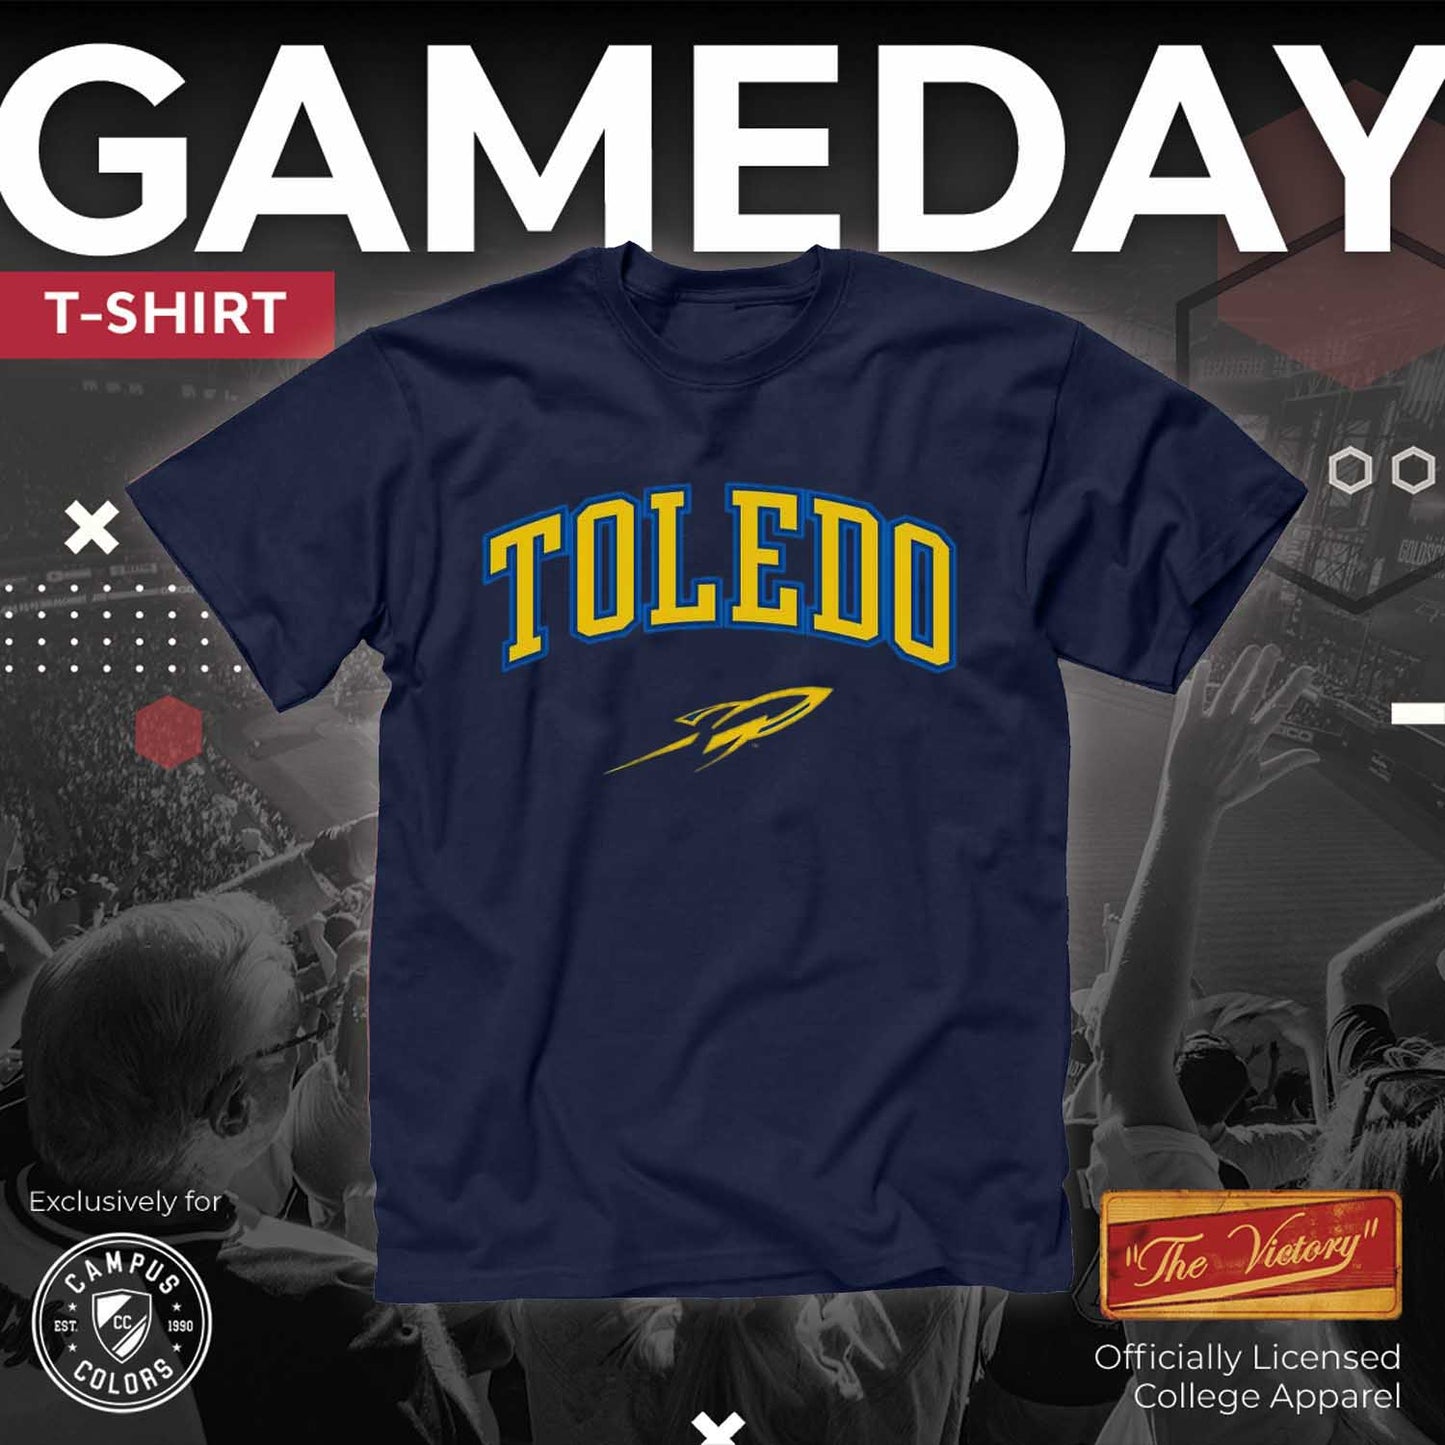 Toledo Rockets NCAA Adult Gameday Cotton T-Shirt - Navy